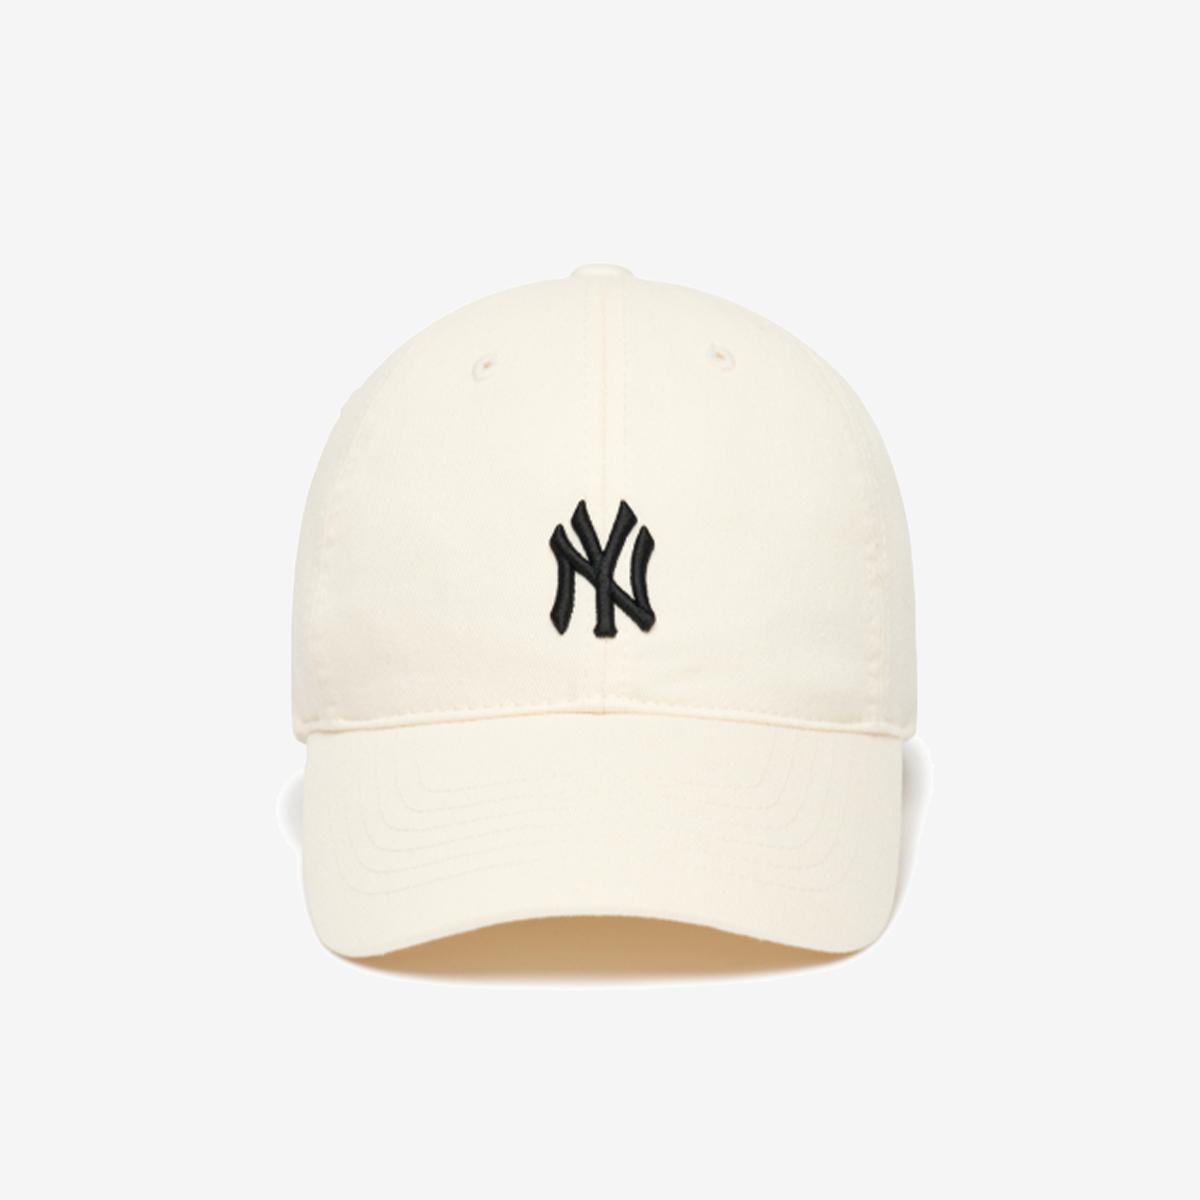 《BTS 柾國同款》紐約洋基隊棒球帽